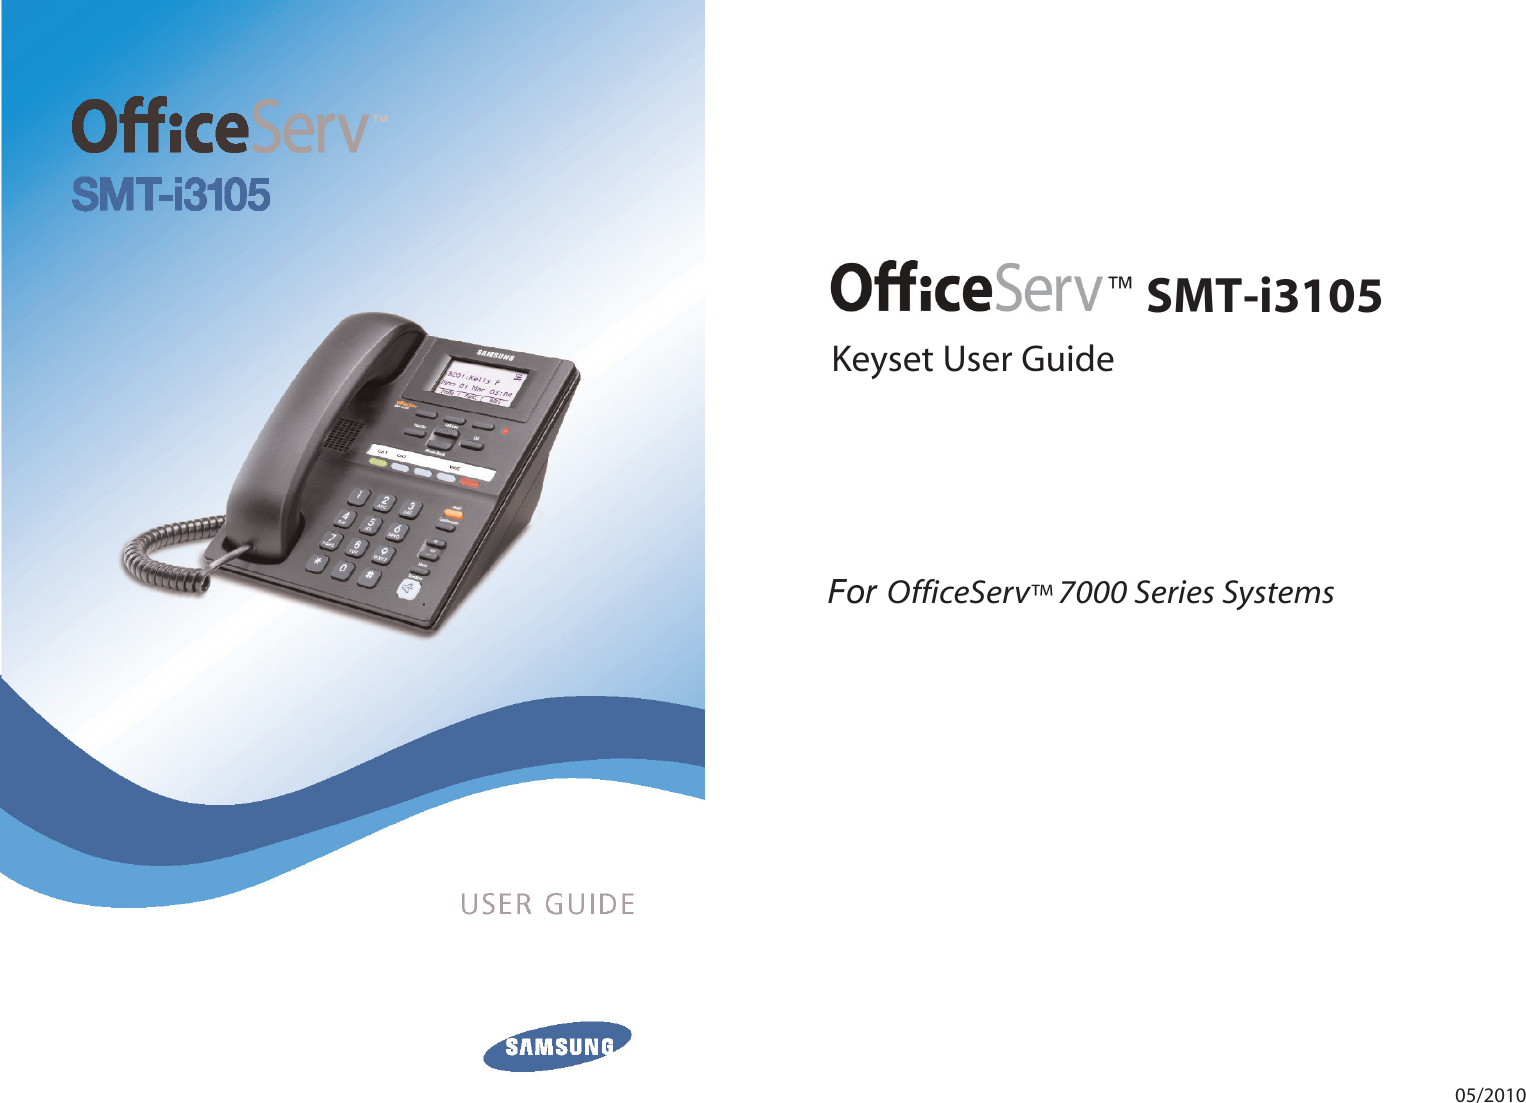 New w/ 5 Yr Warranty Samsung OfficeServ SMT-i3105D 